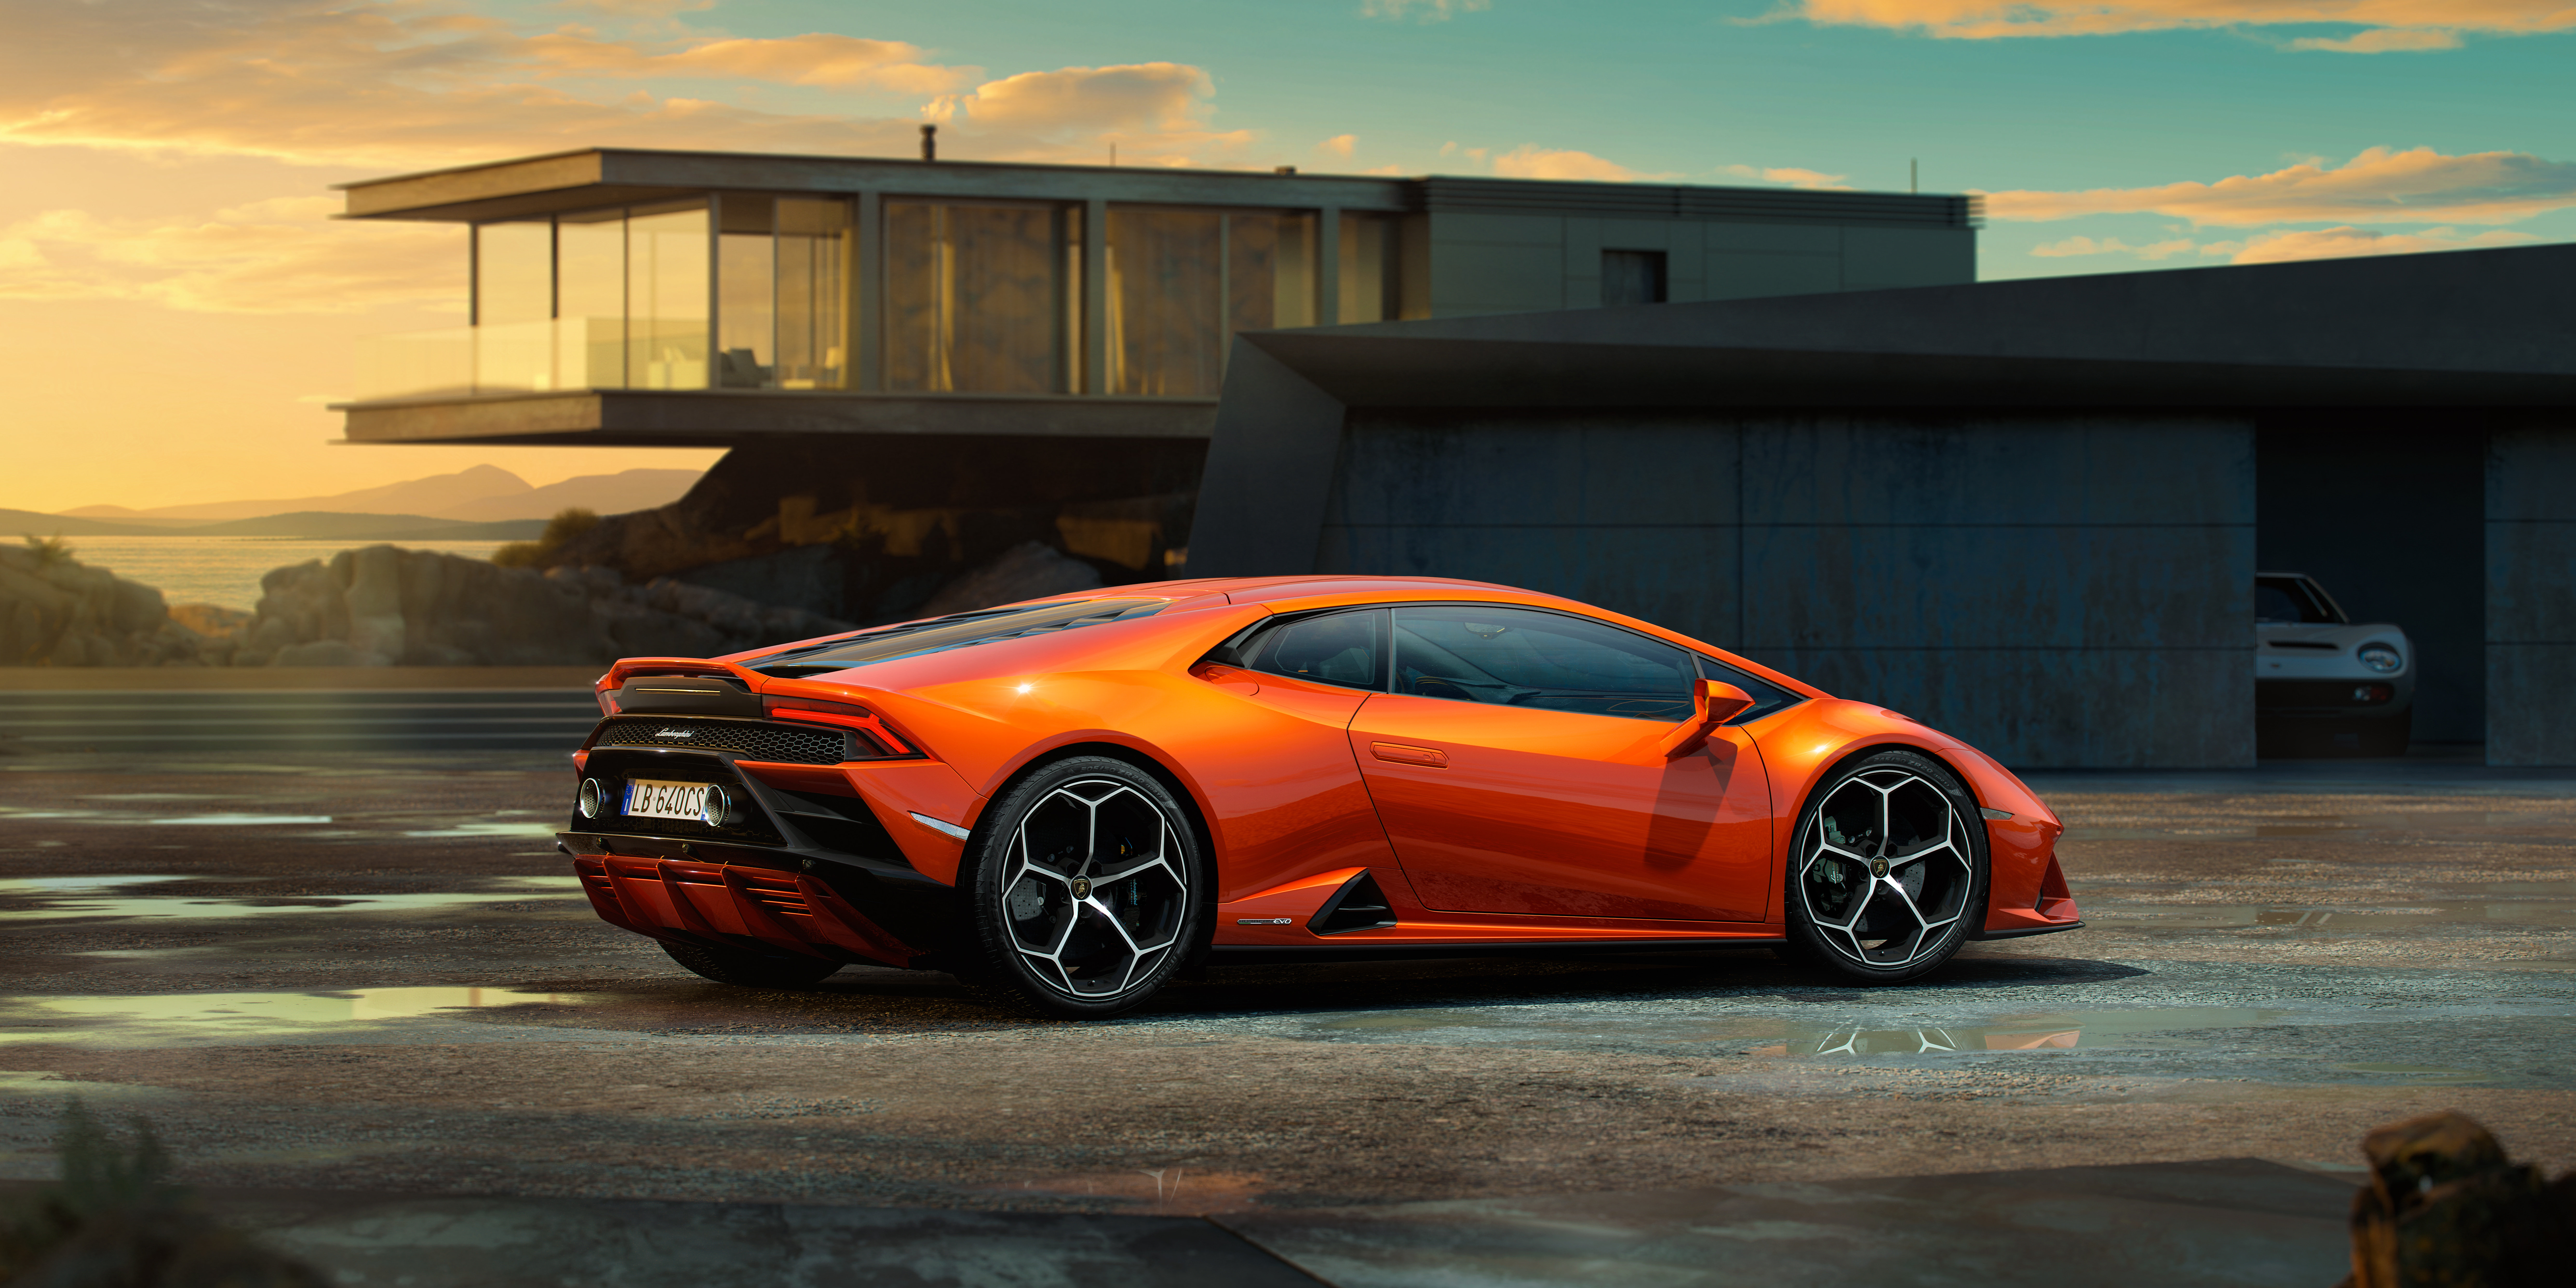 Lamborghini Huracan Evo shown: 640 hp, smarter aids Paul ...